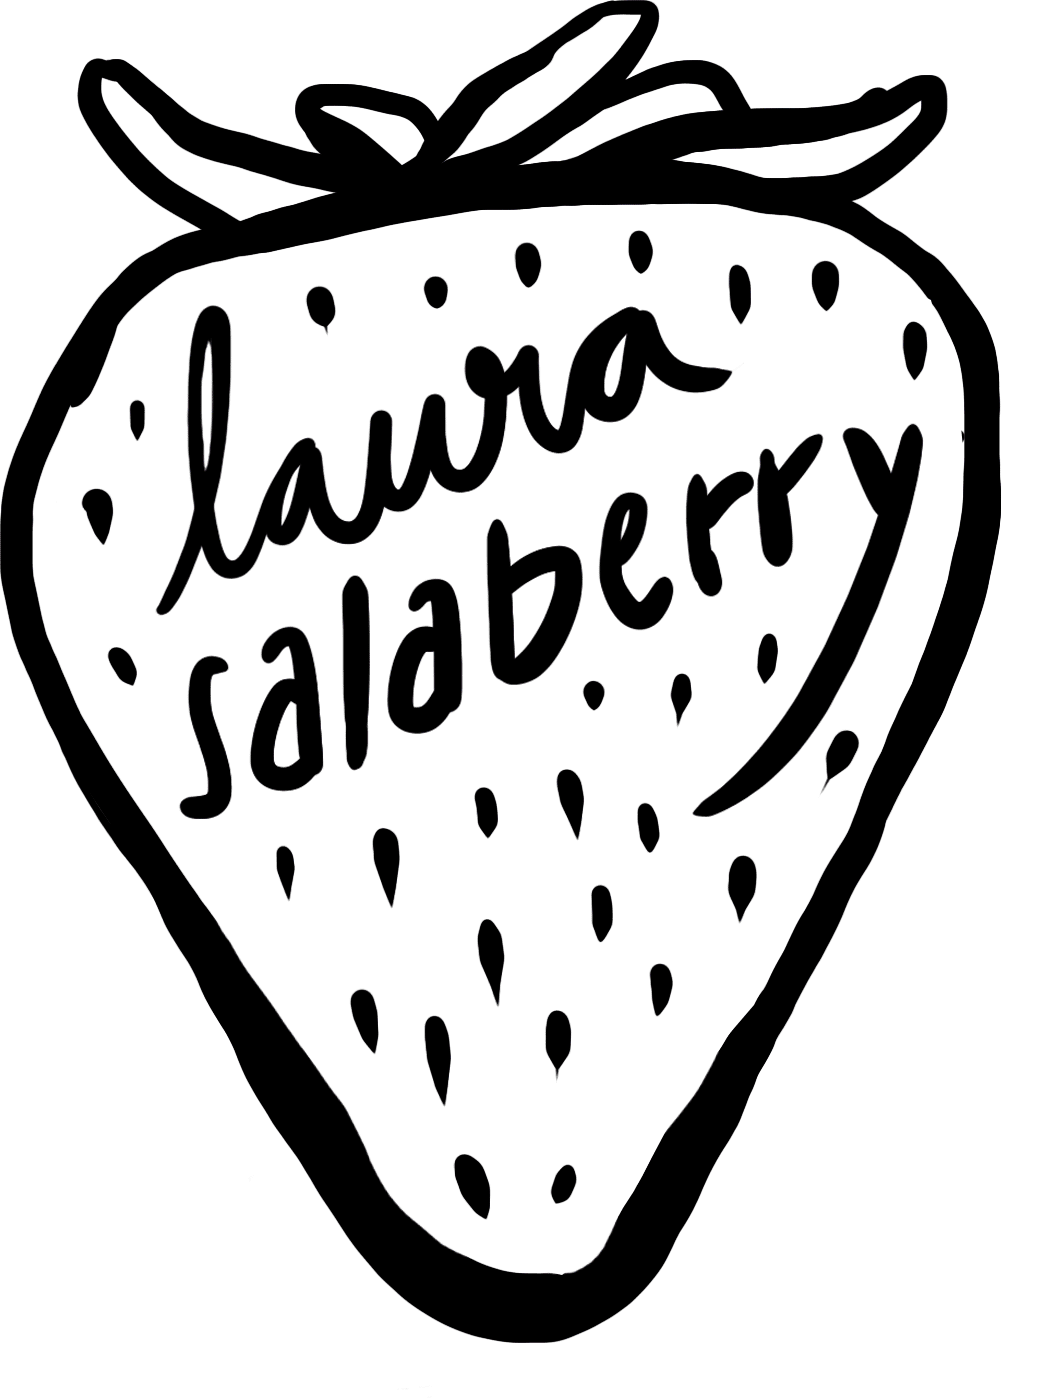 laura salaberry's portfolio